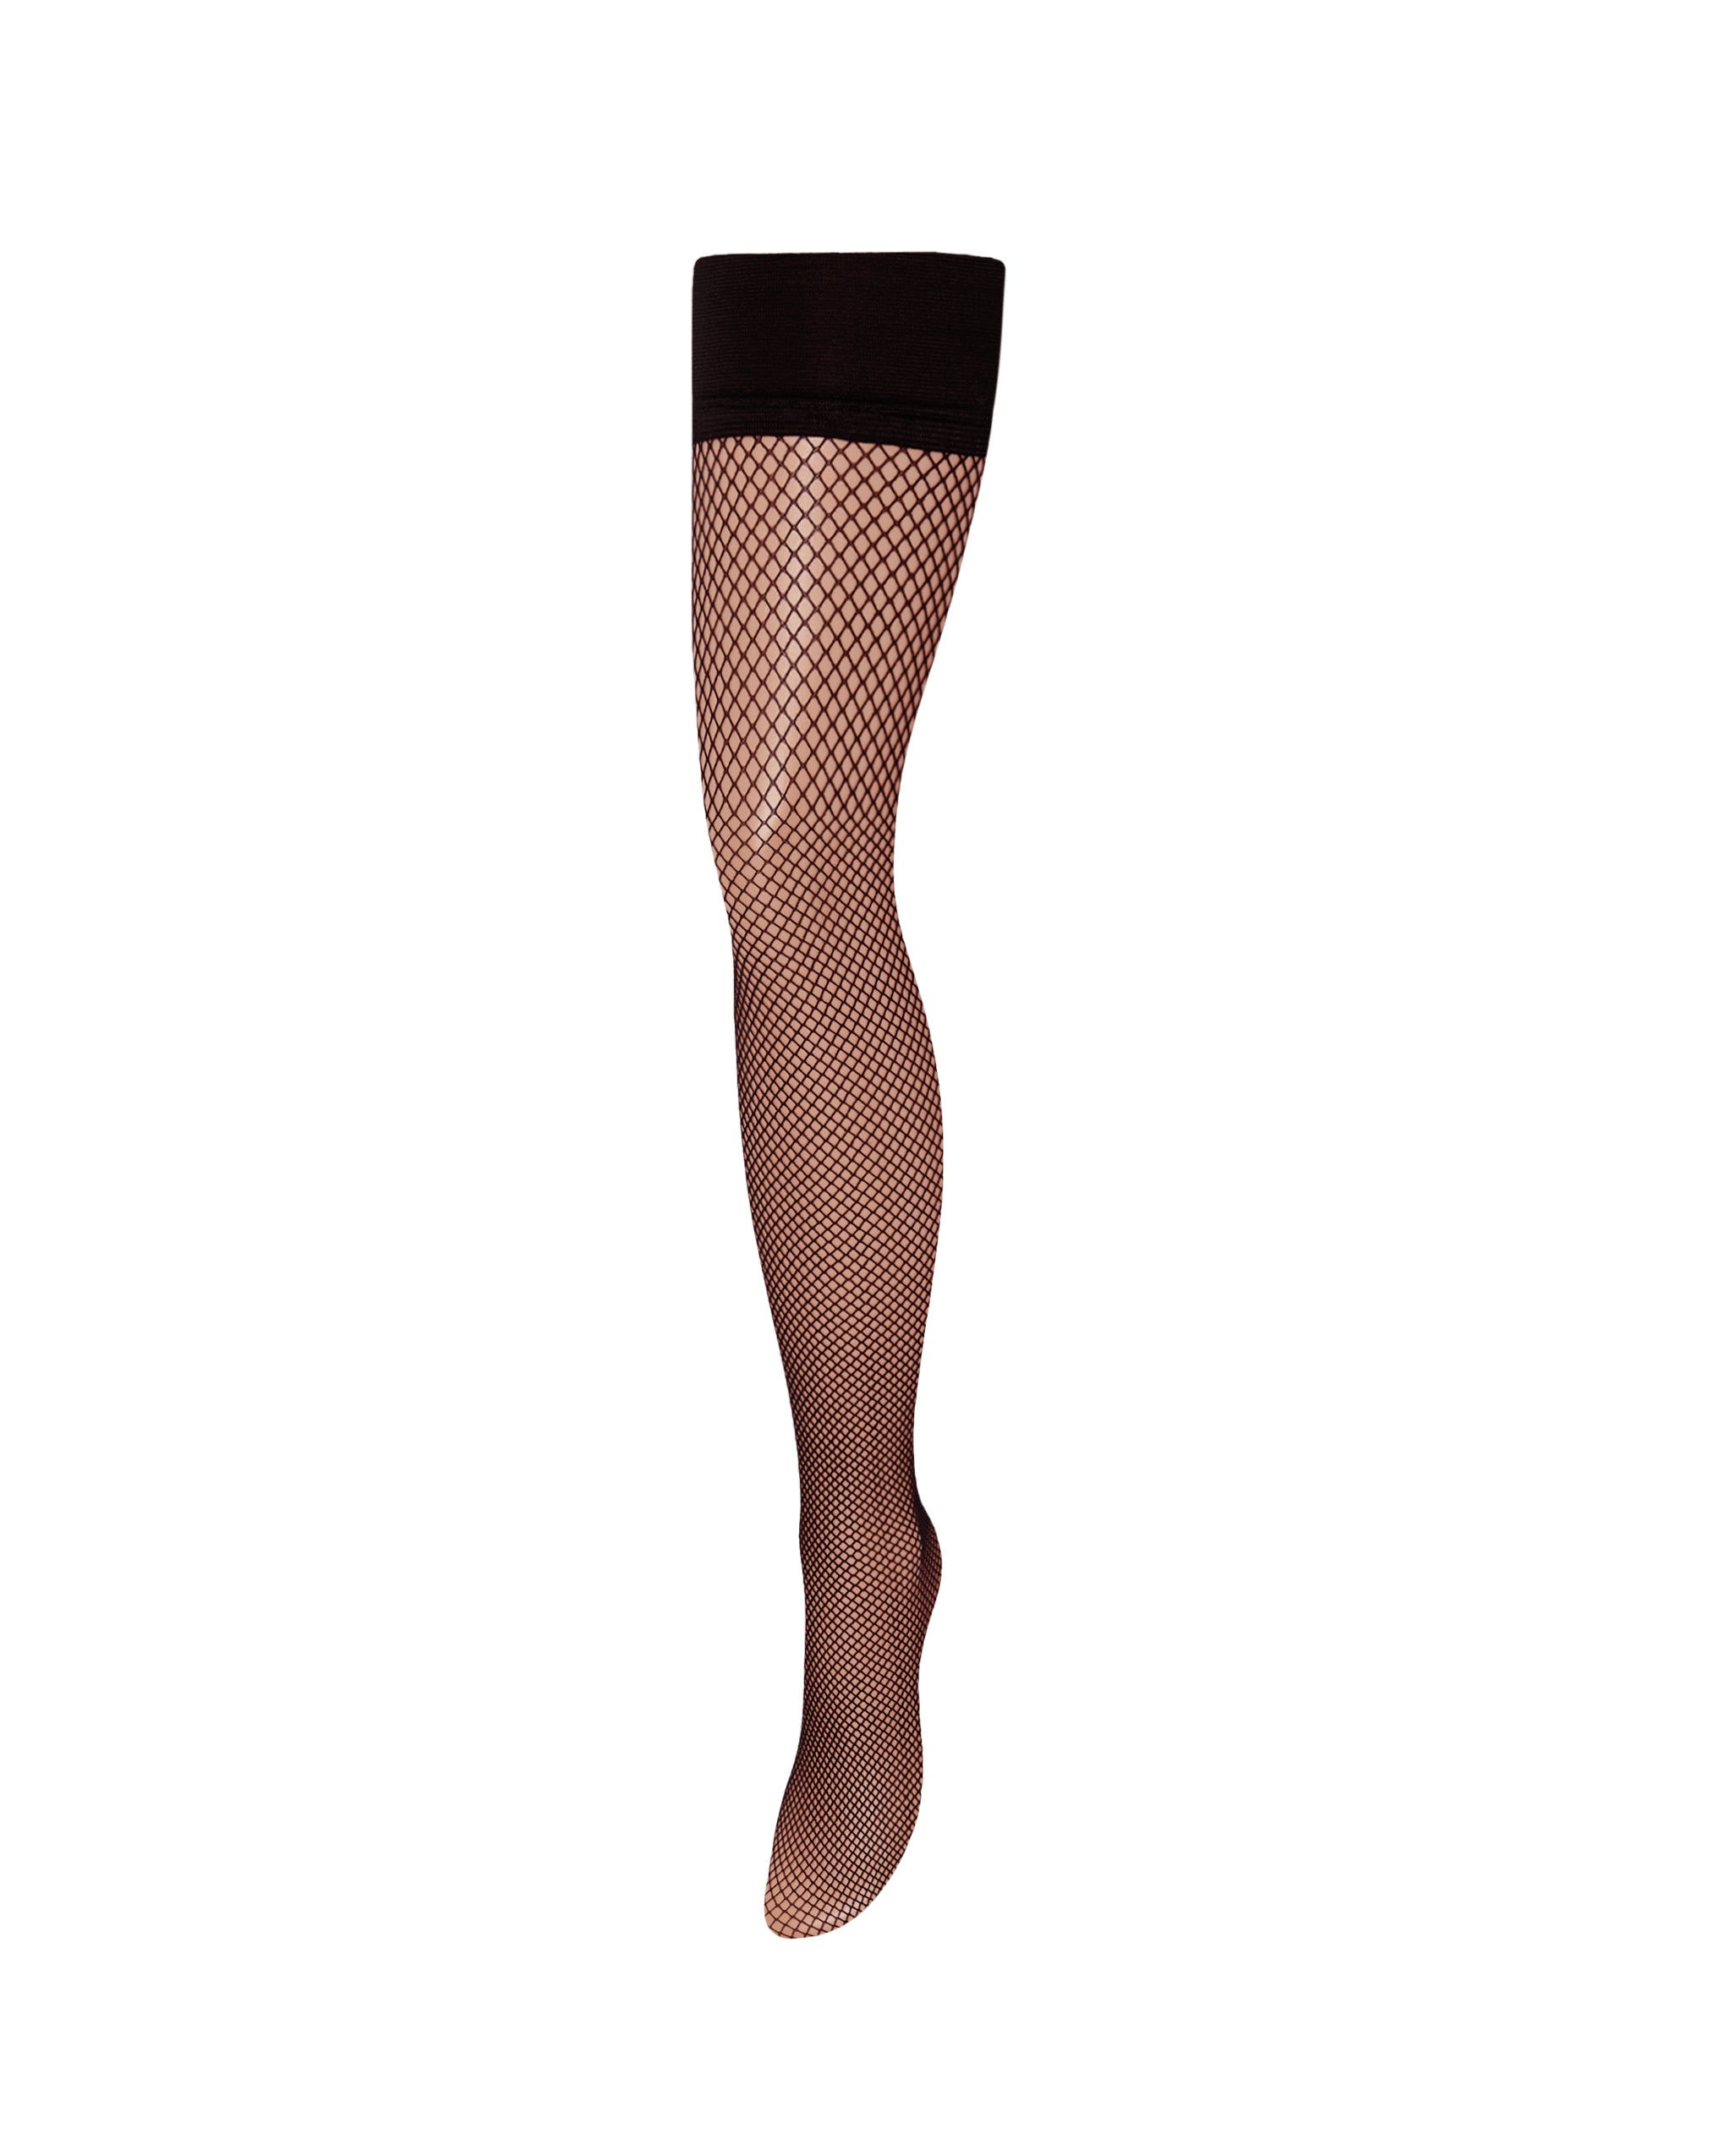 Bluebella Fishnet Leg/Plain Top Stockings Black